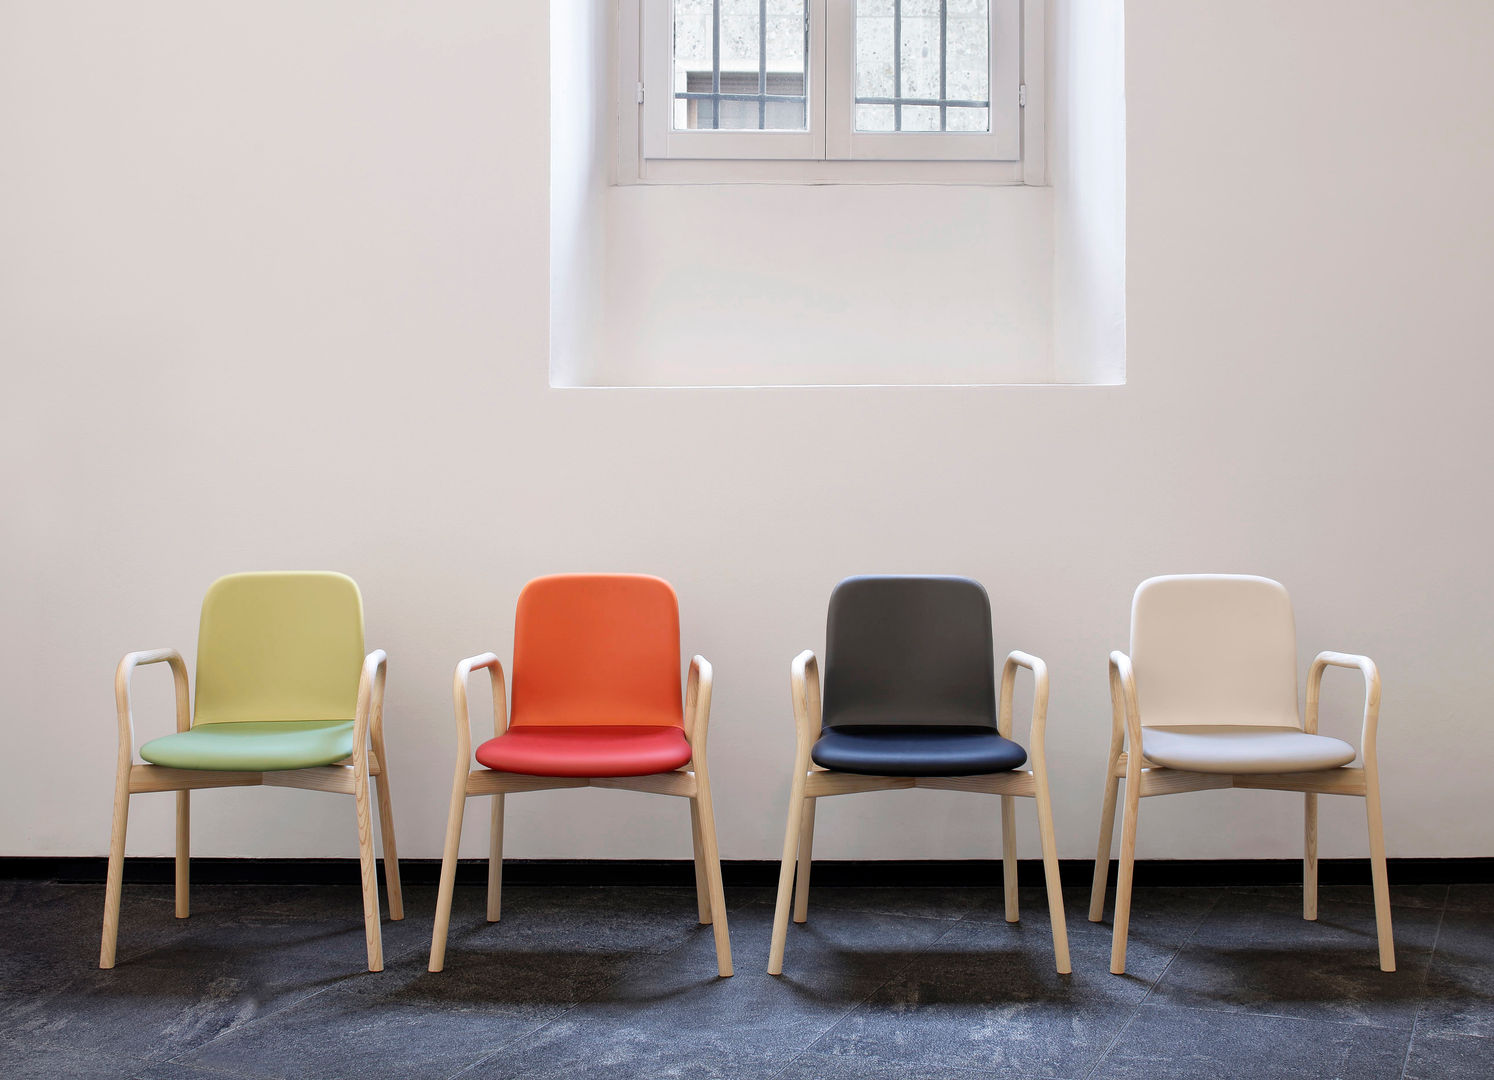 Two Tone chair, IWASAKI DESIGN STUDIO IWASAKI DESIGN STUDIO Ruang makan: Ide desain, inspirasi & gambar Chairs & benches